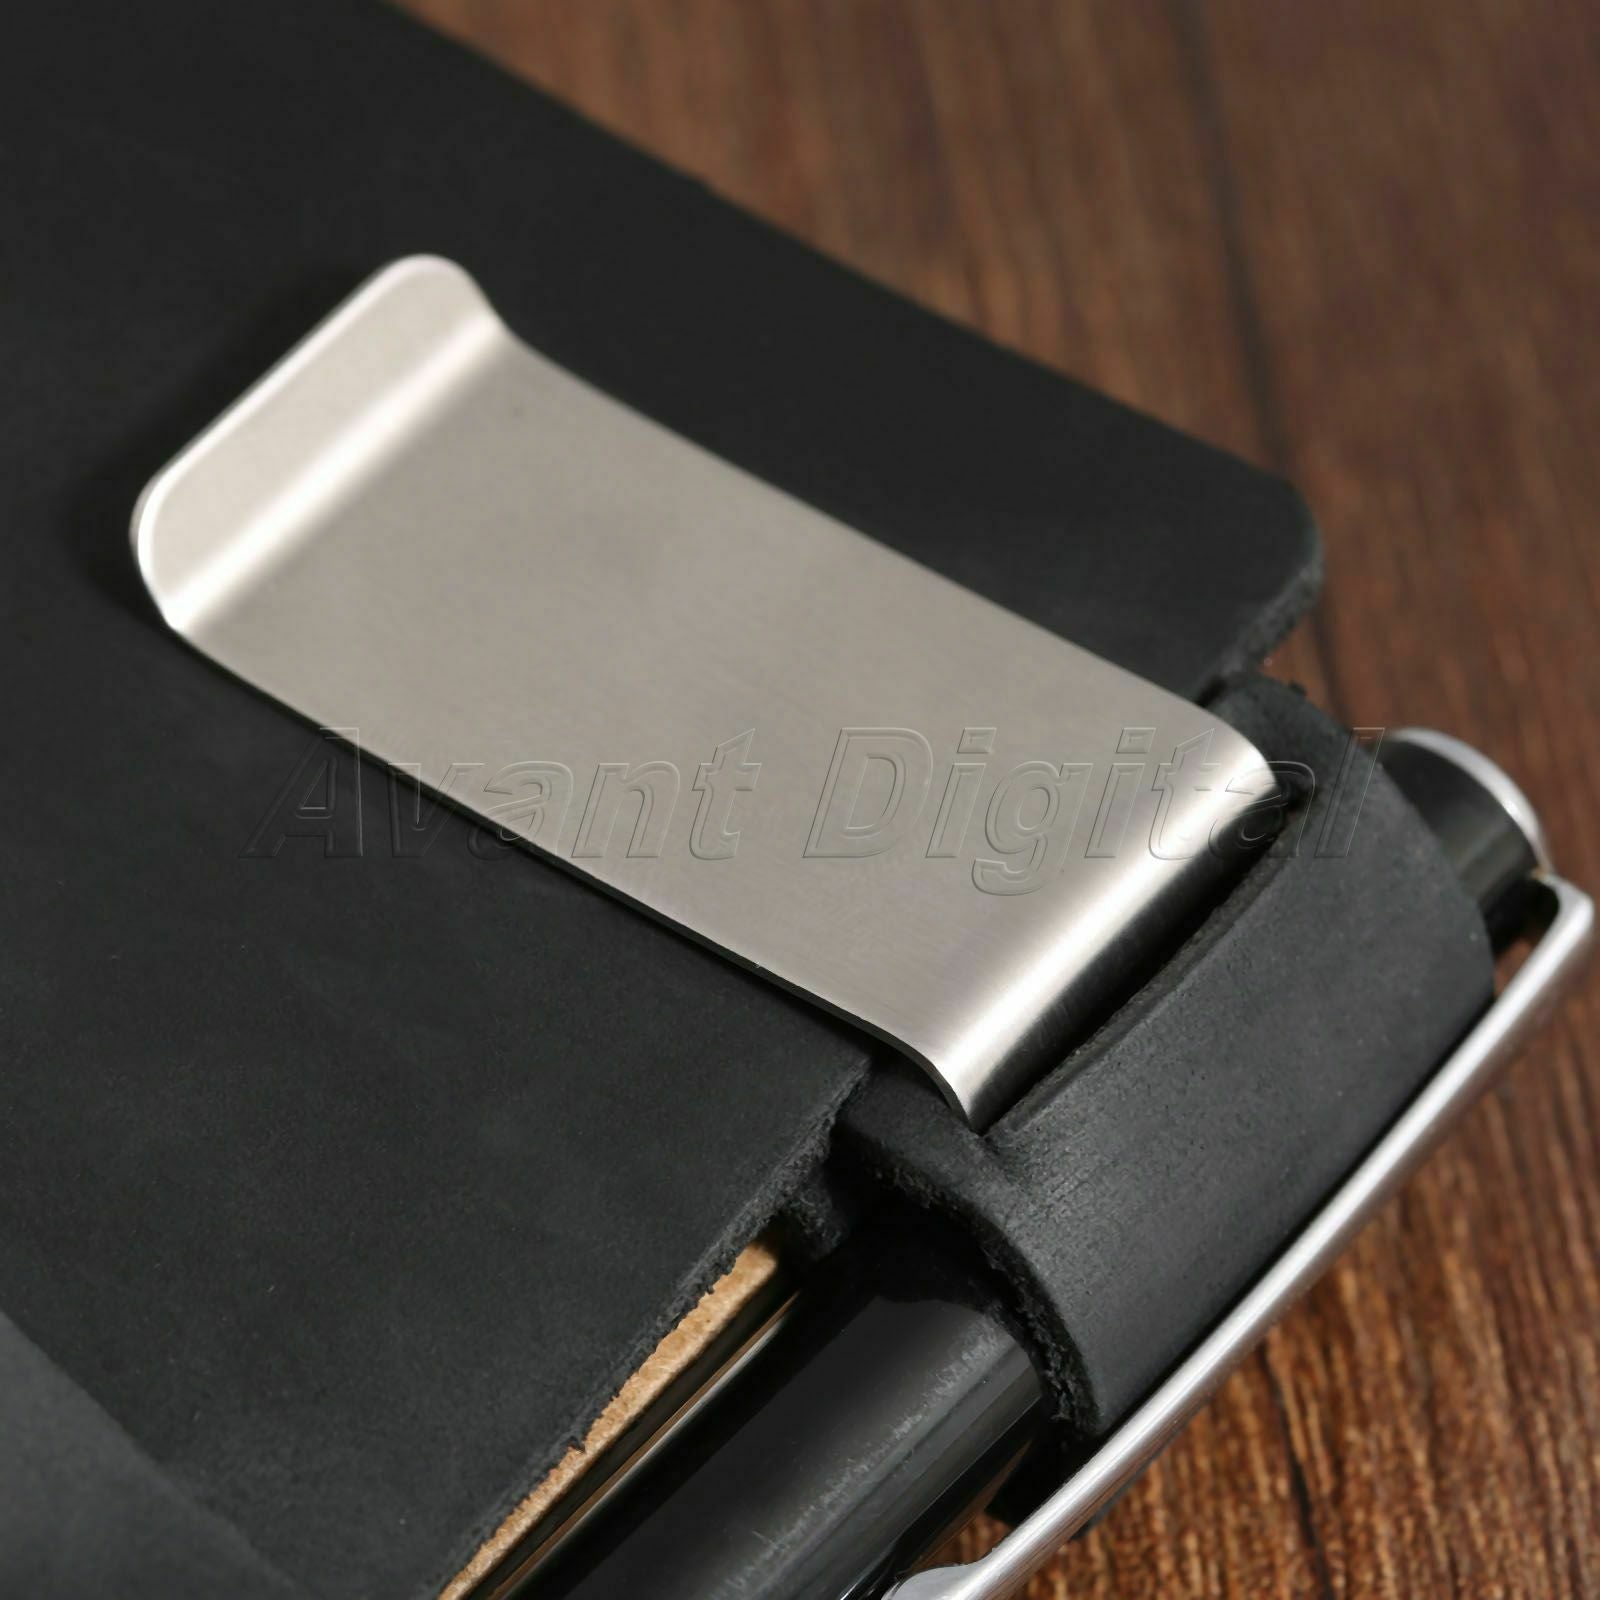 New Black Leather Pen Organizer Holder For Passport Notebook Diary Journal Memo